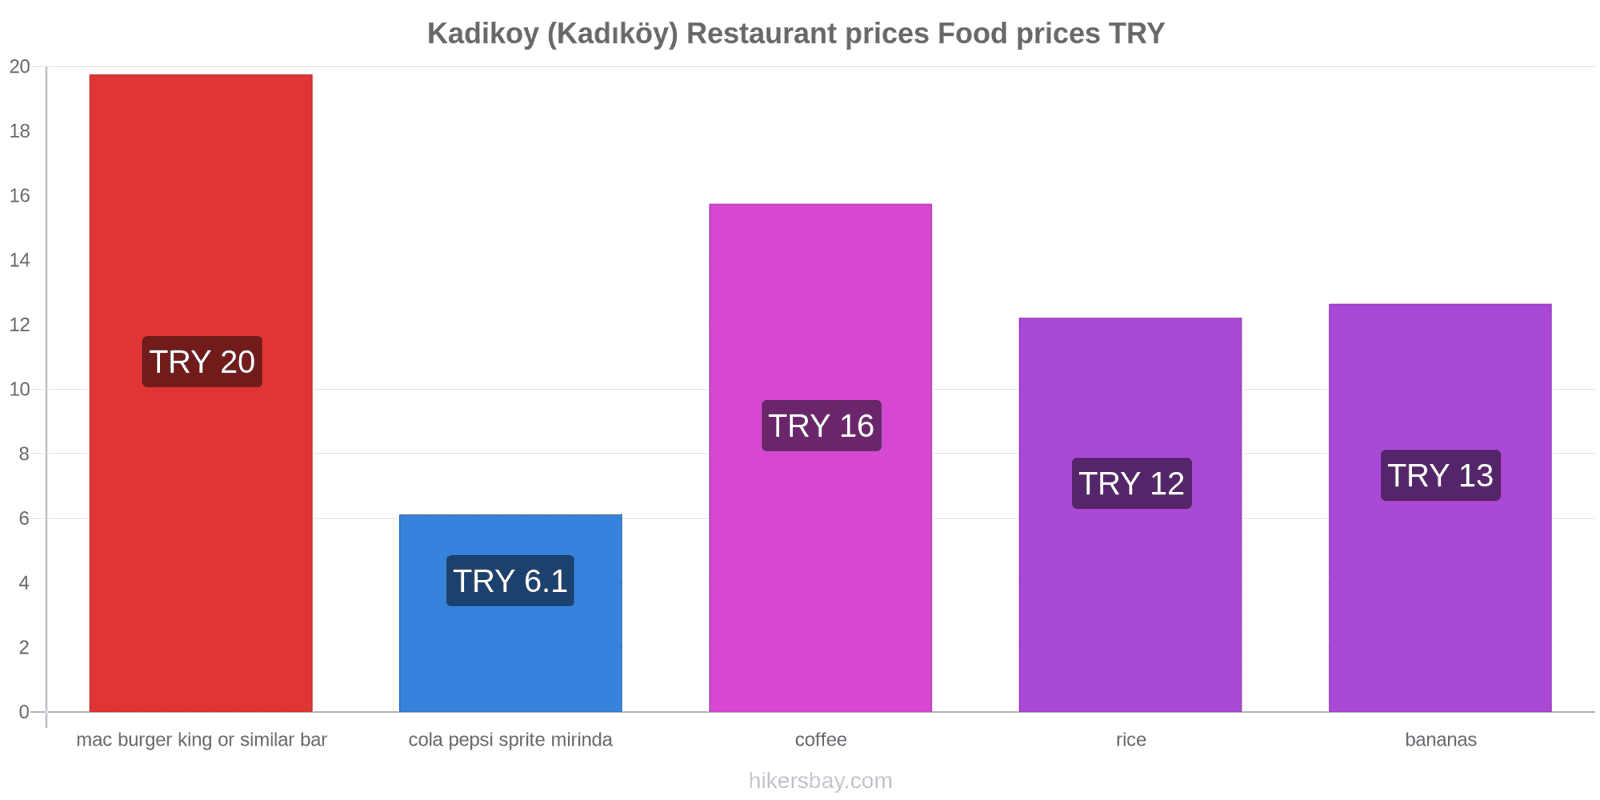 Kadikoy (Kadıköy) price changes hikersbay.com